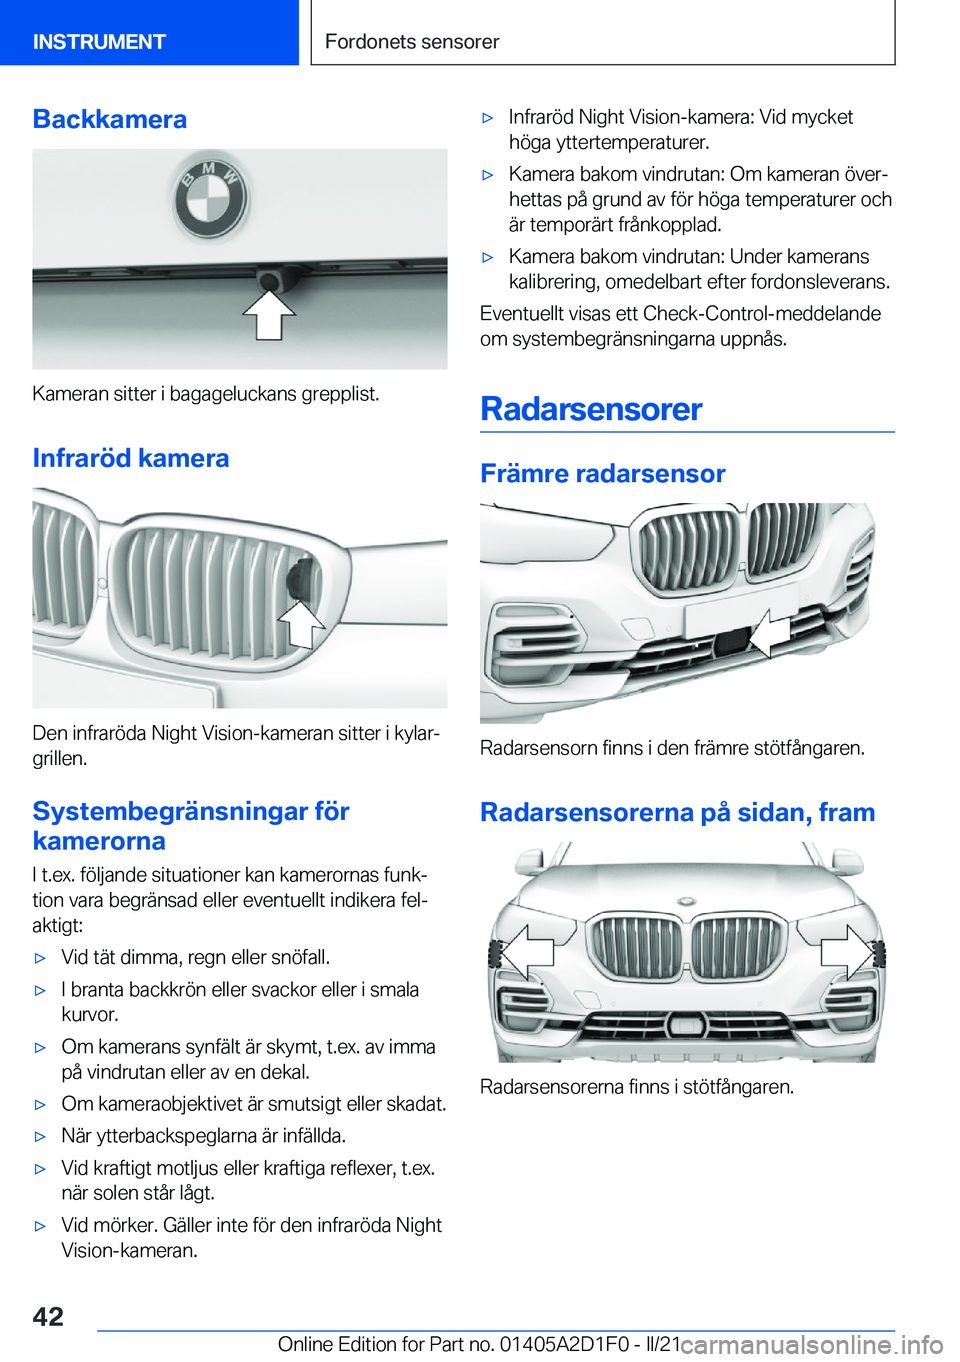 BMW X6 M 2021  InstruktionsbÖcker (in Swedish) �B�a�c�k�k�a�m�e�r�a
�K�a�m�e�r�a�n��s�i�t�t�e�r��i��b�a�g�a�g�e�l�u�c�k�a�n�s��g�r�e�p�p�l�i�s�t�.
�I�n�f�r�a�r�